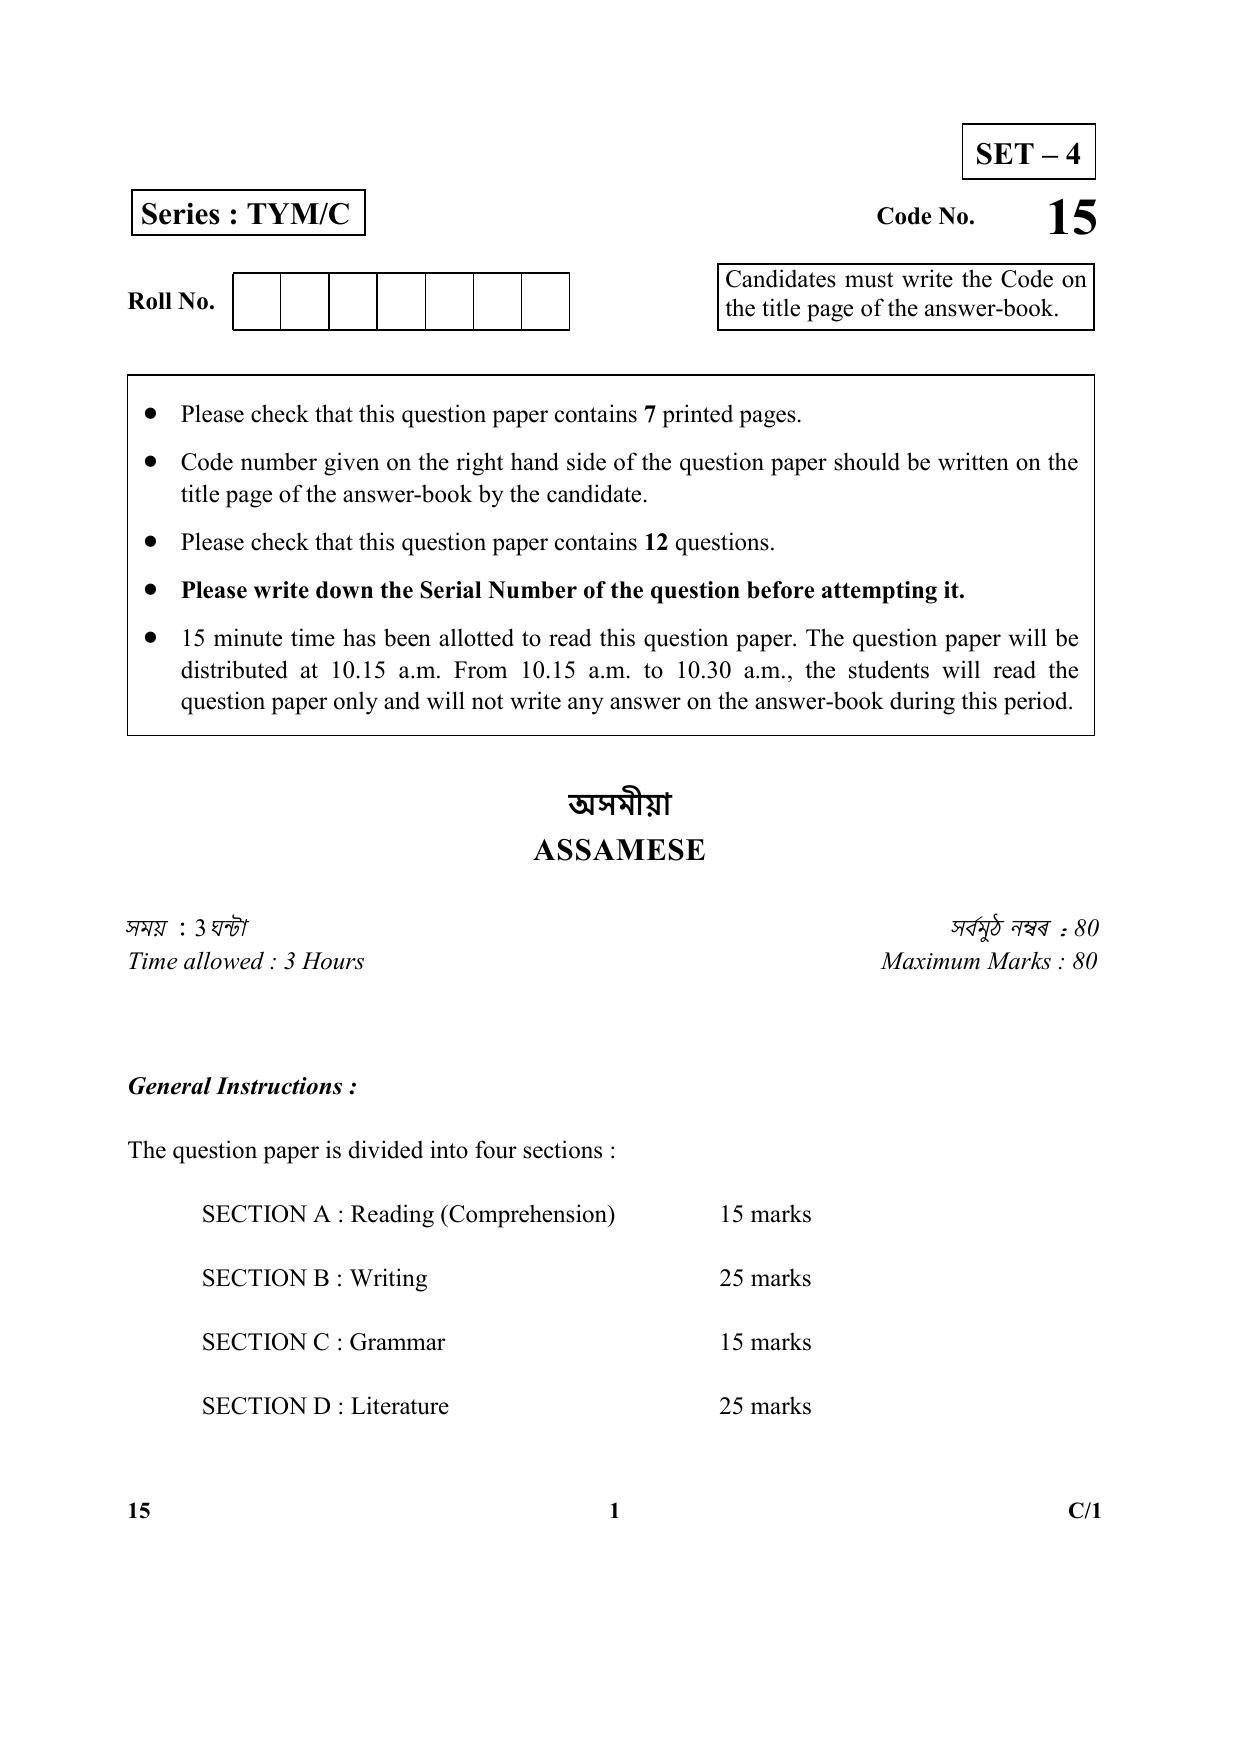 CBSE Class 10 15 (Assamese) 2018 Compartment Question Paper - Page 1